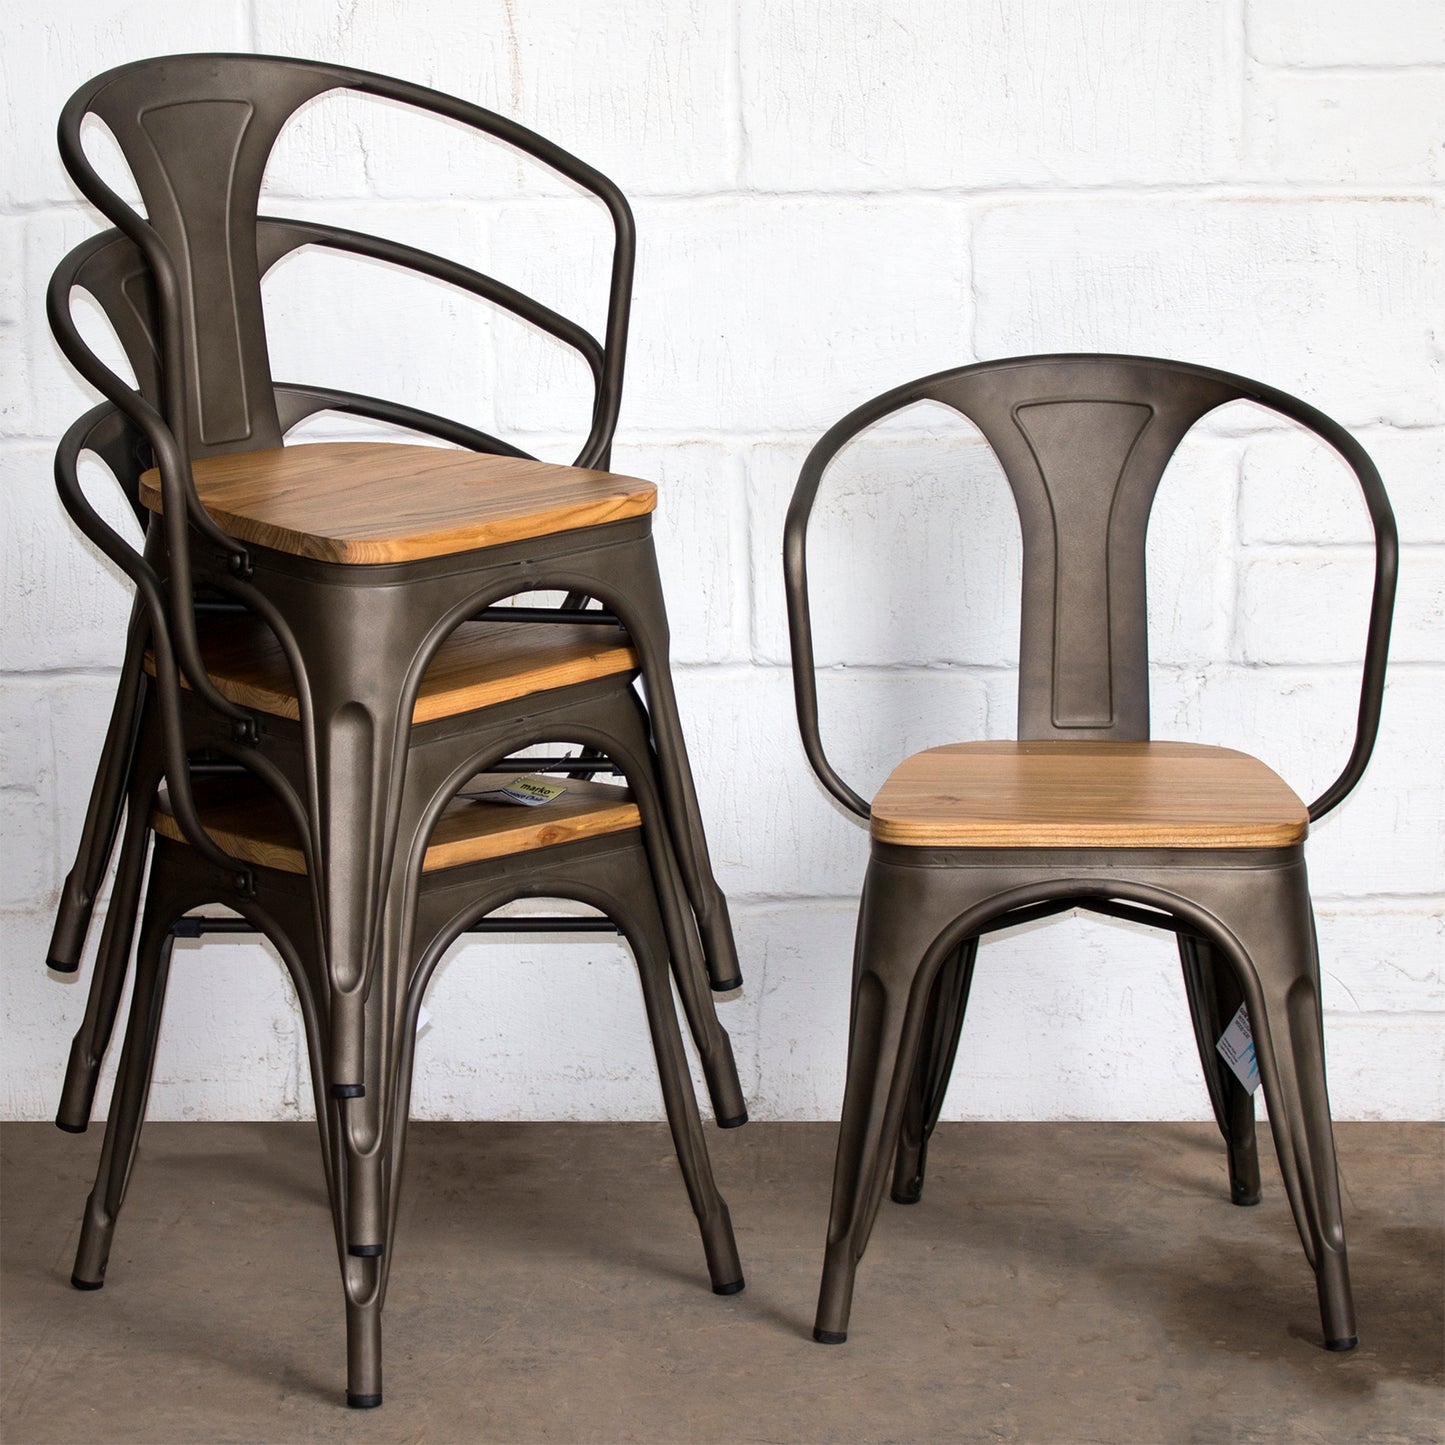 5PC Belvedere Table & Florence Chair Set - Gun Metal Grey